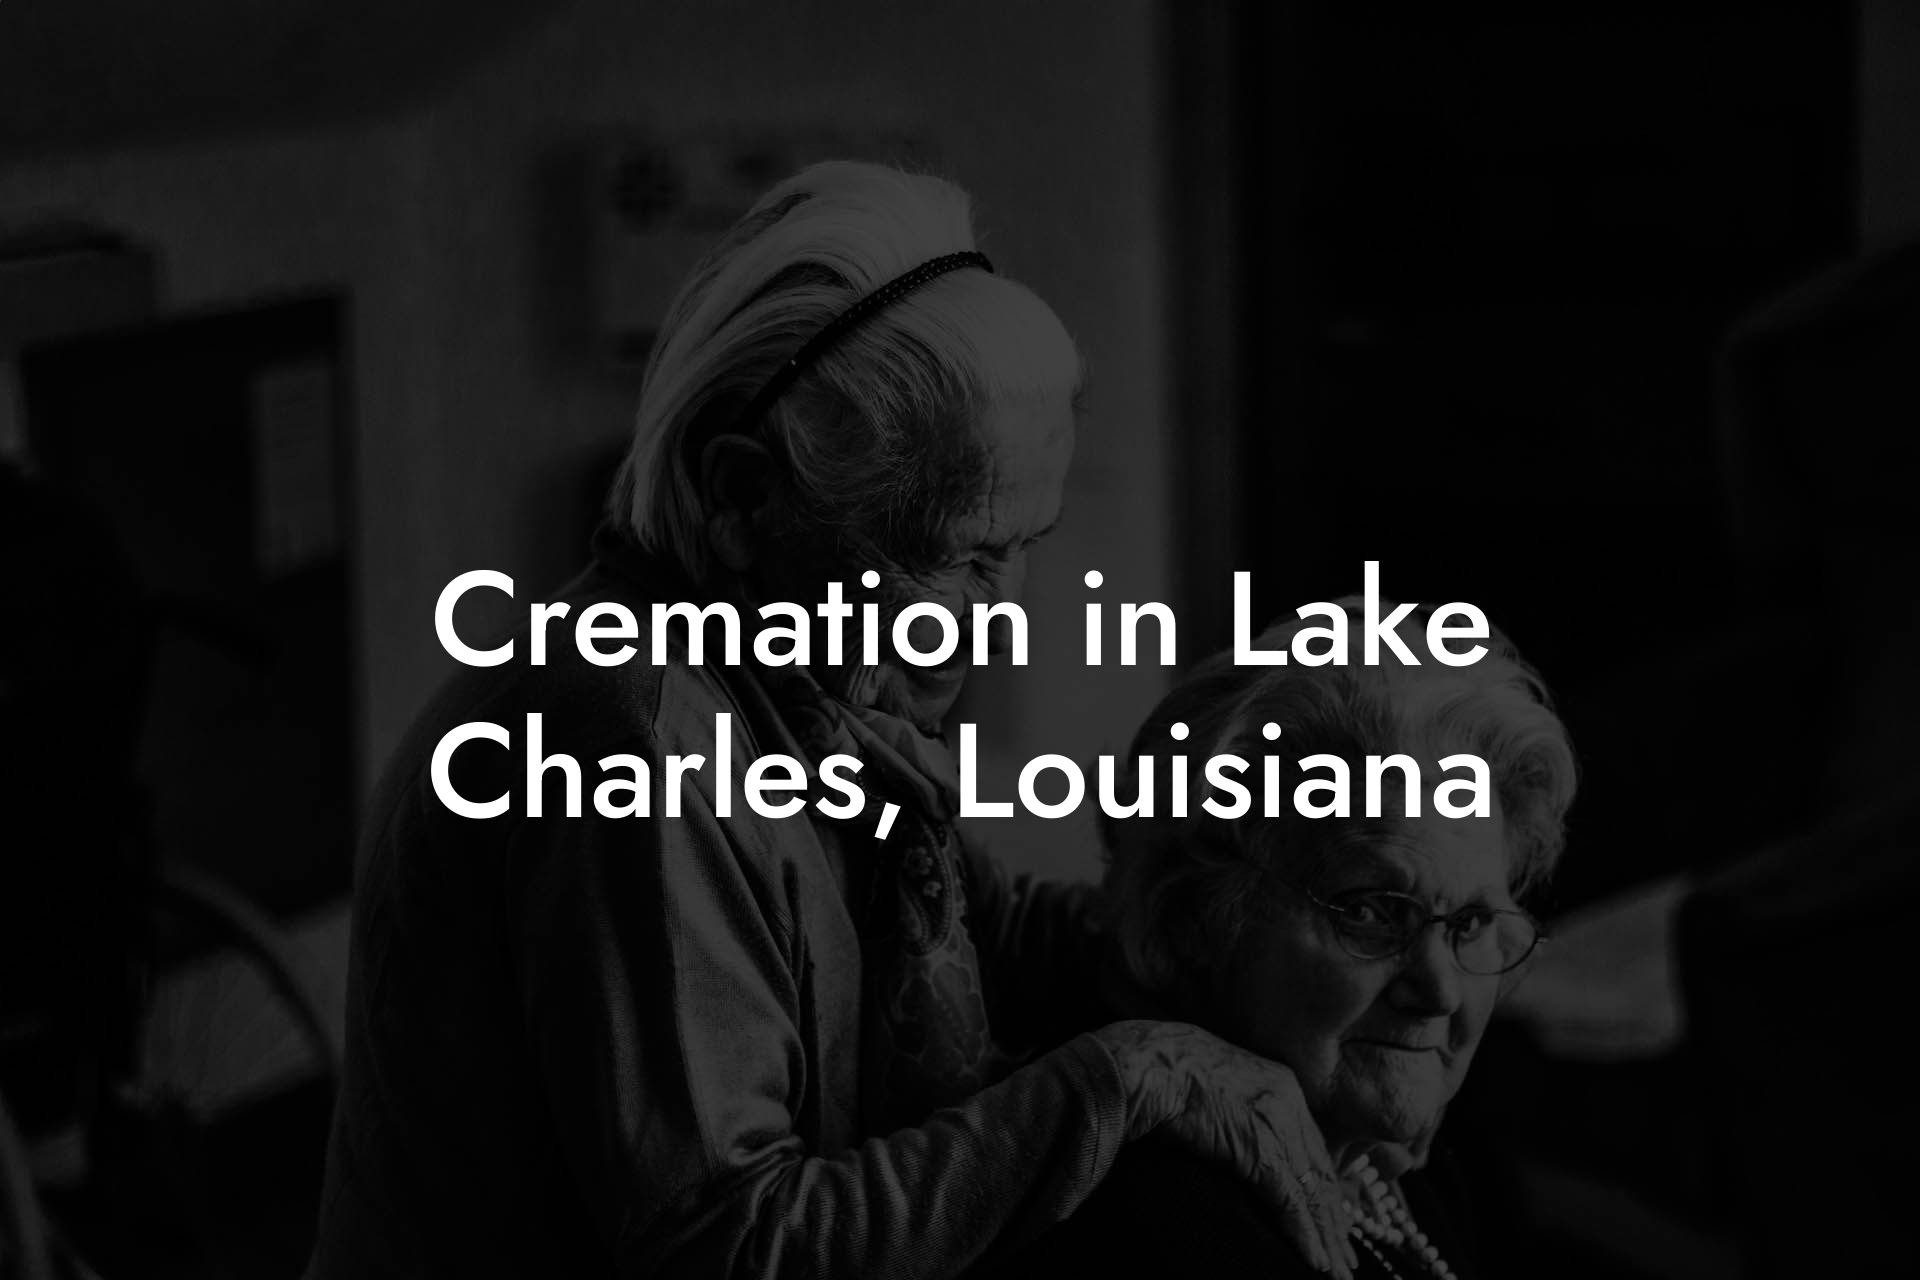 Cremation in Lake Charles, Louisiana